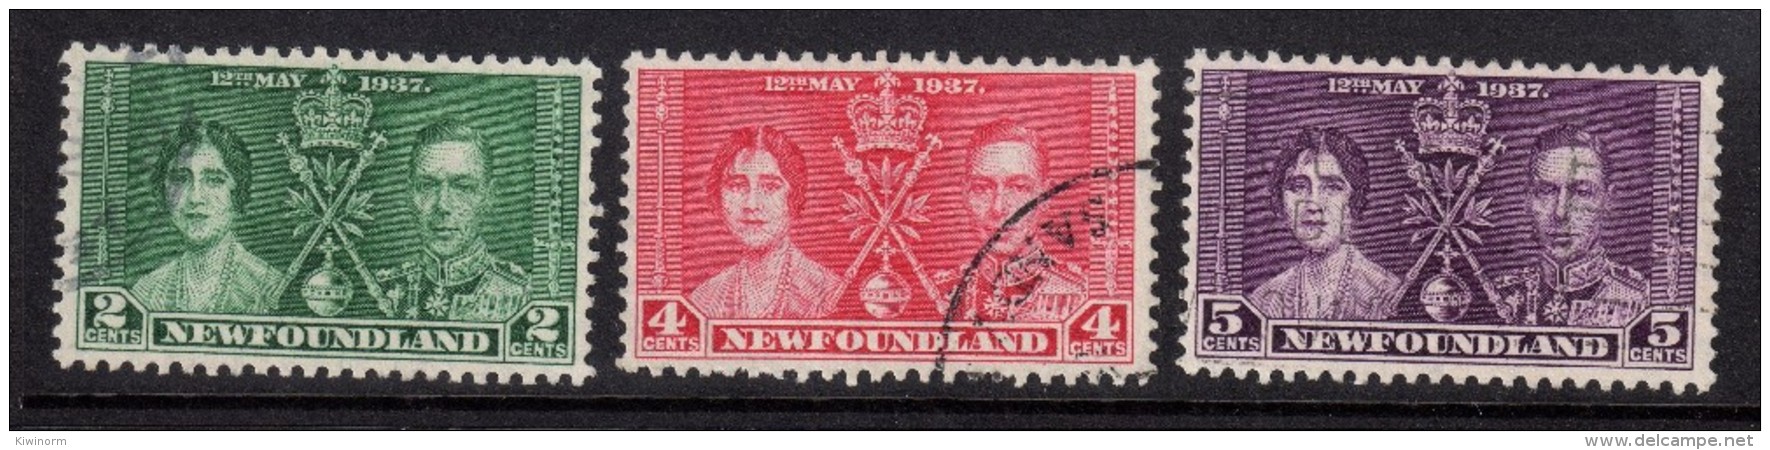 NEWFOUNDLAND CANADA 1937 Coronation Omnibus Set - Very Fine Used - VFU - 5B834 - 1857-1861